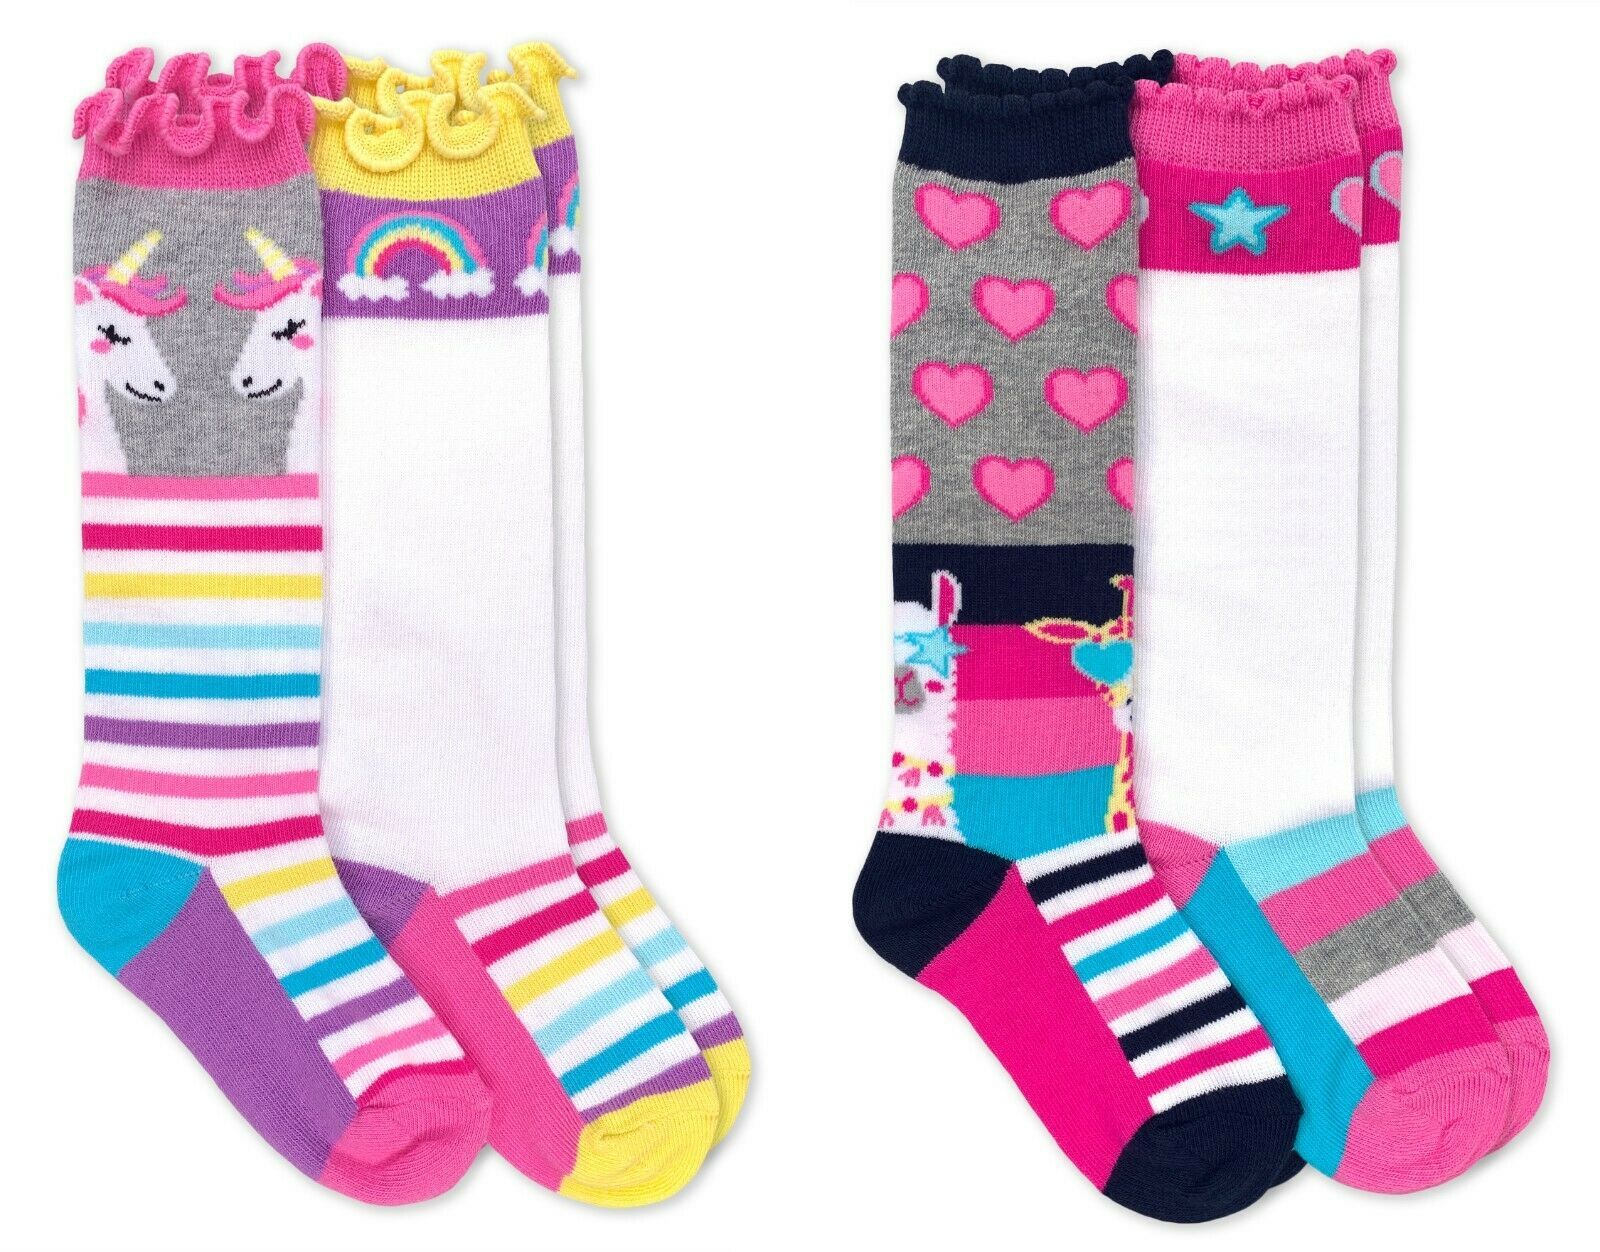 2 Pair Jefferies Socks Girls Rainbow Unicorn Pattern Cotton Tall Knee High Socks